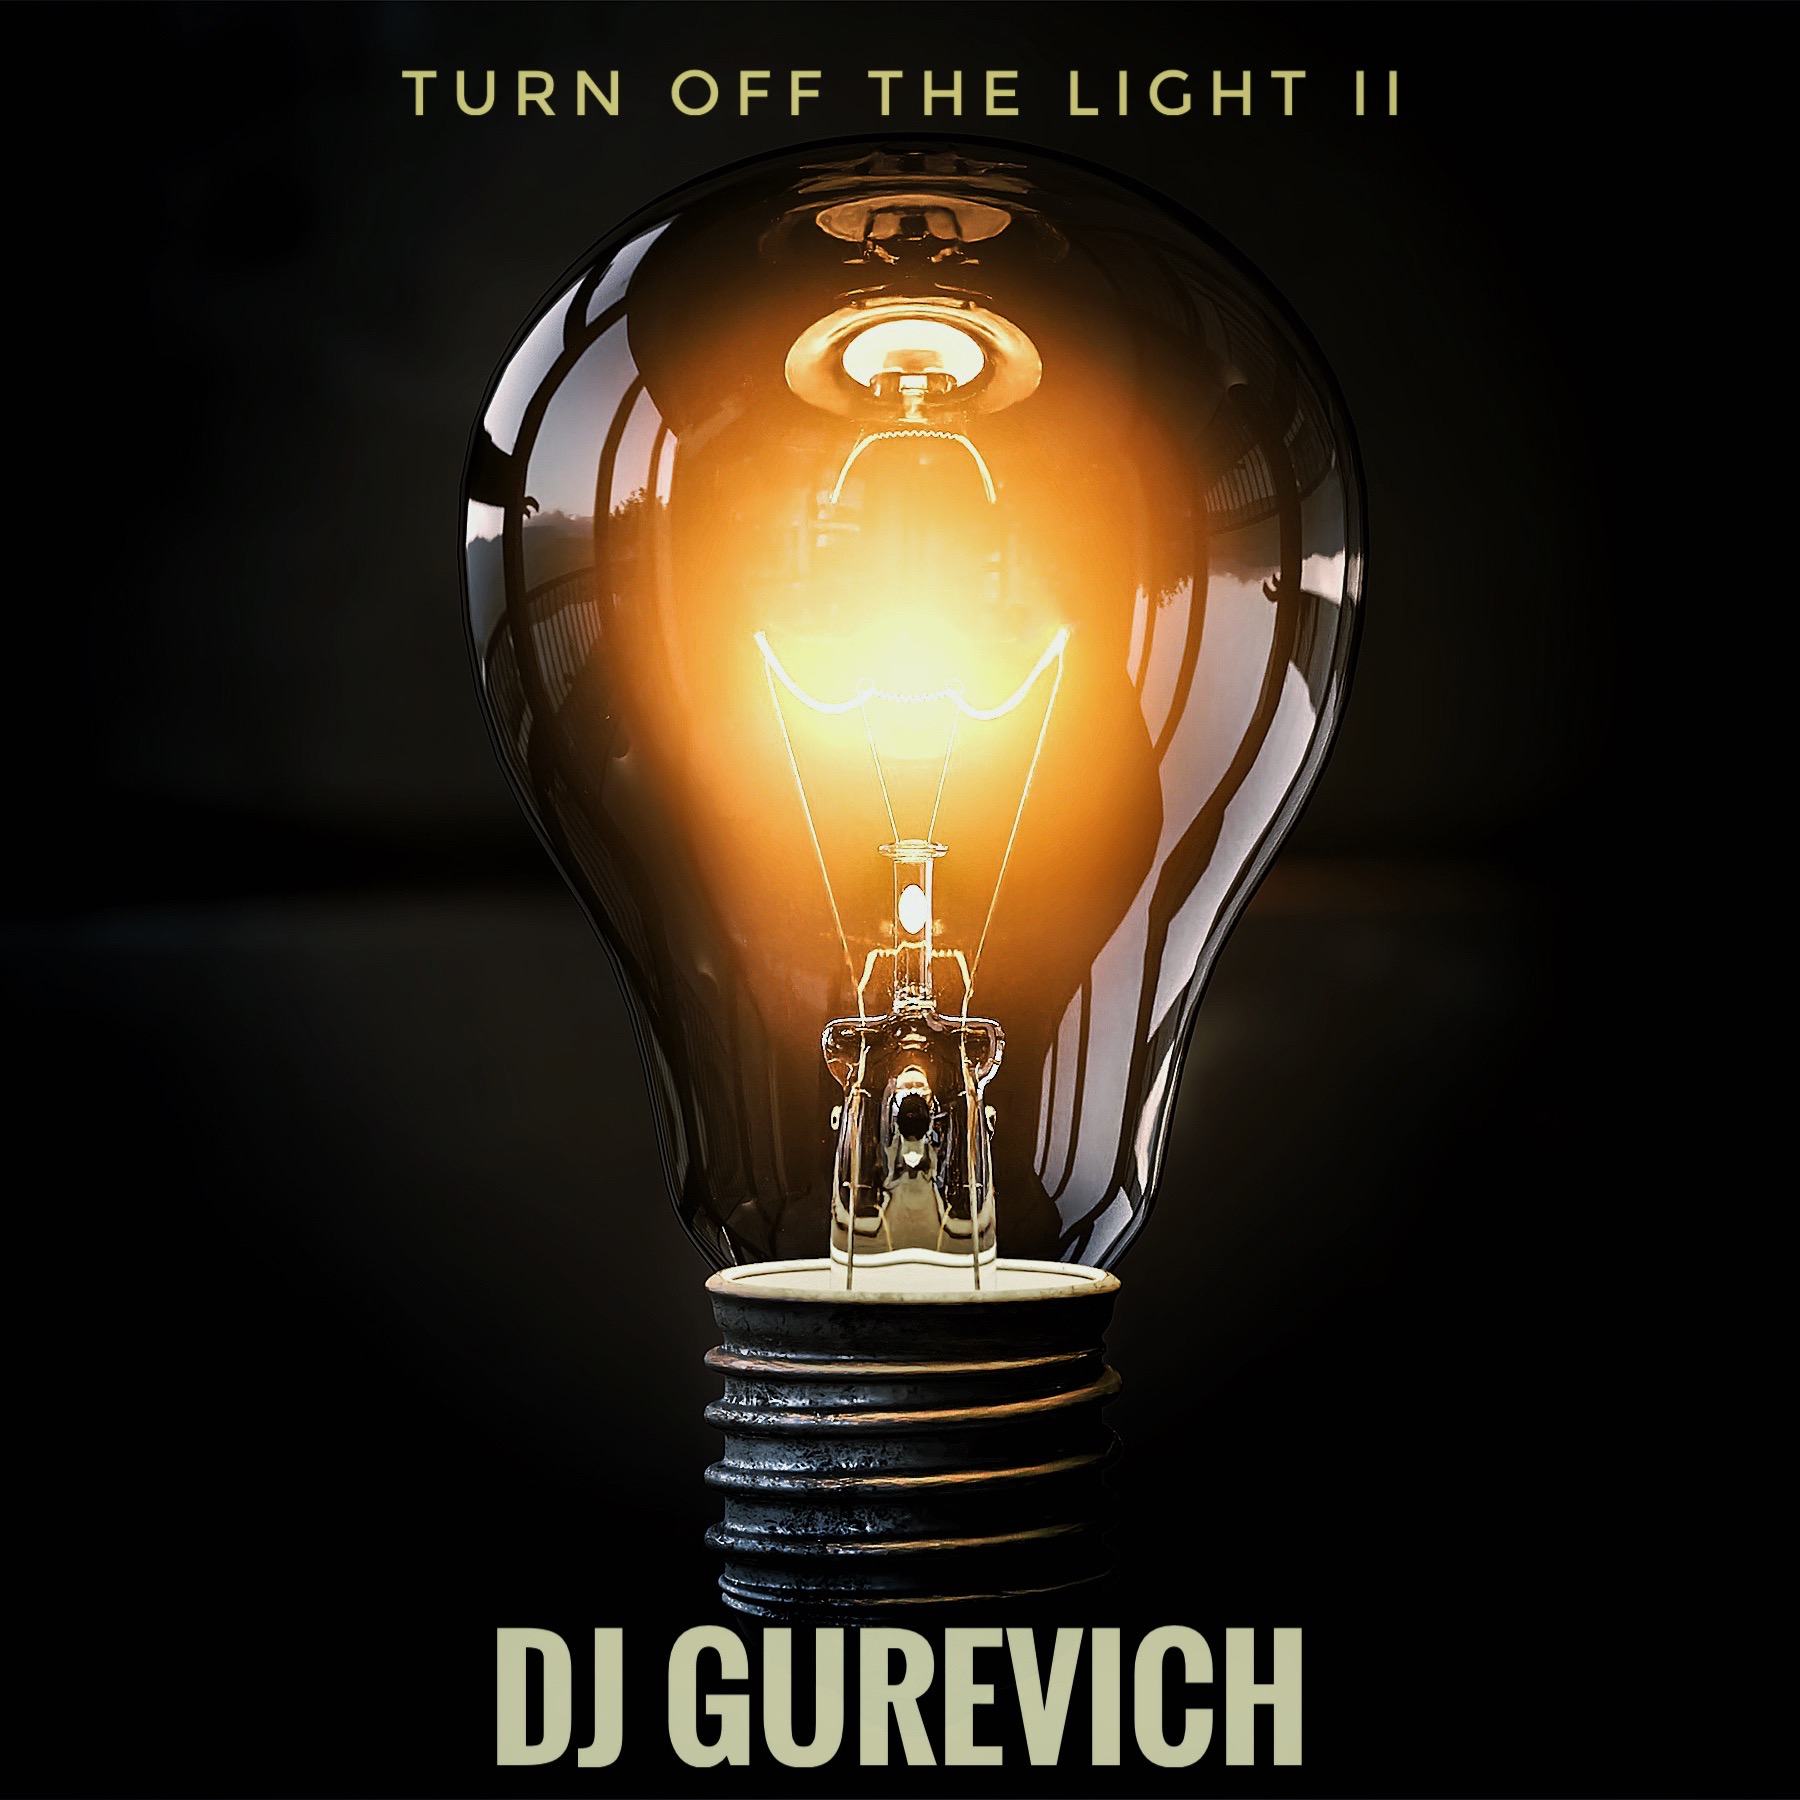 डाउनलोड करा Dj Gurevich - Turn off light II